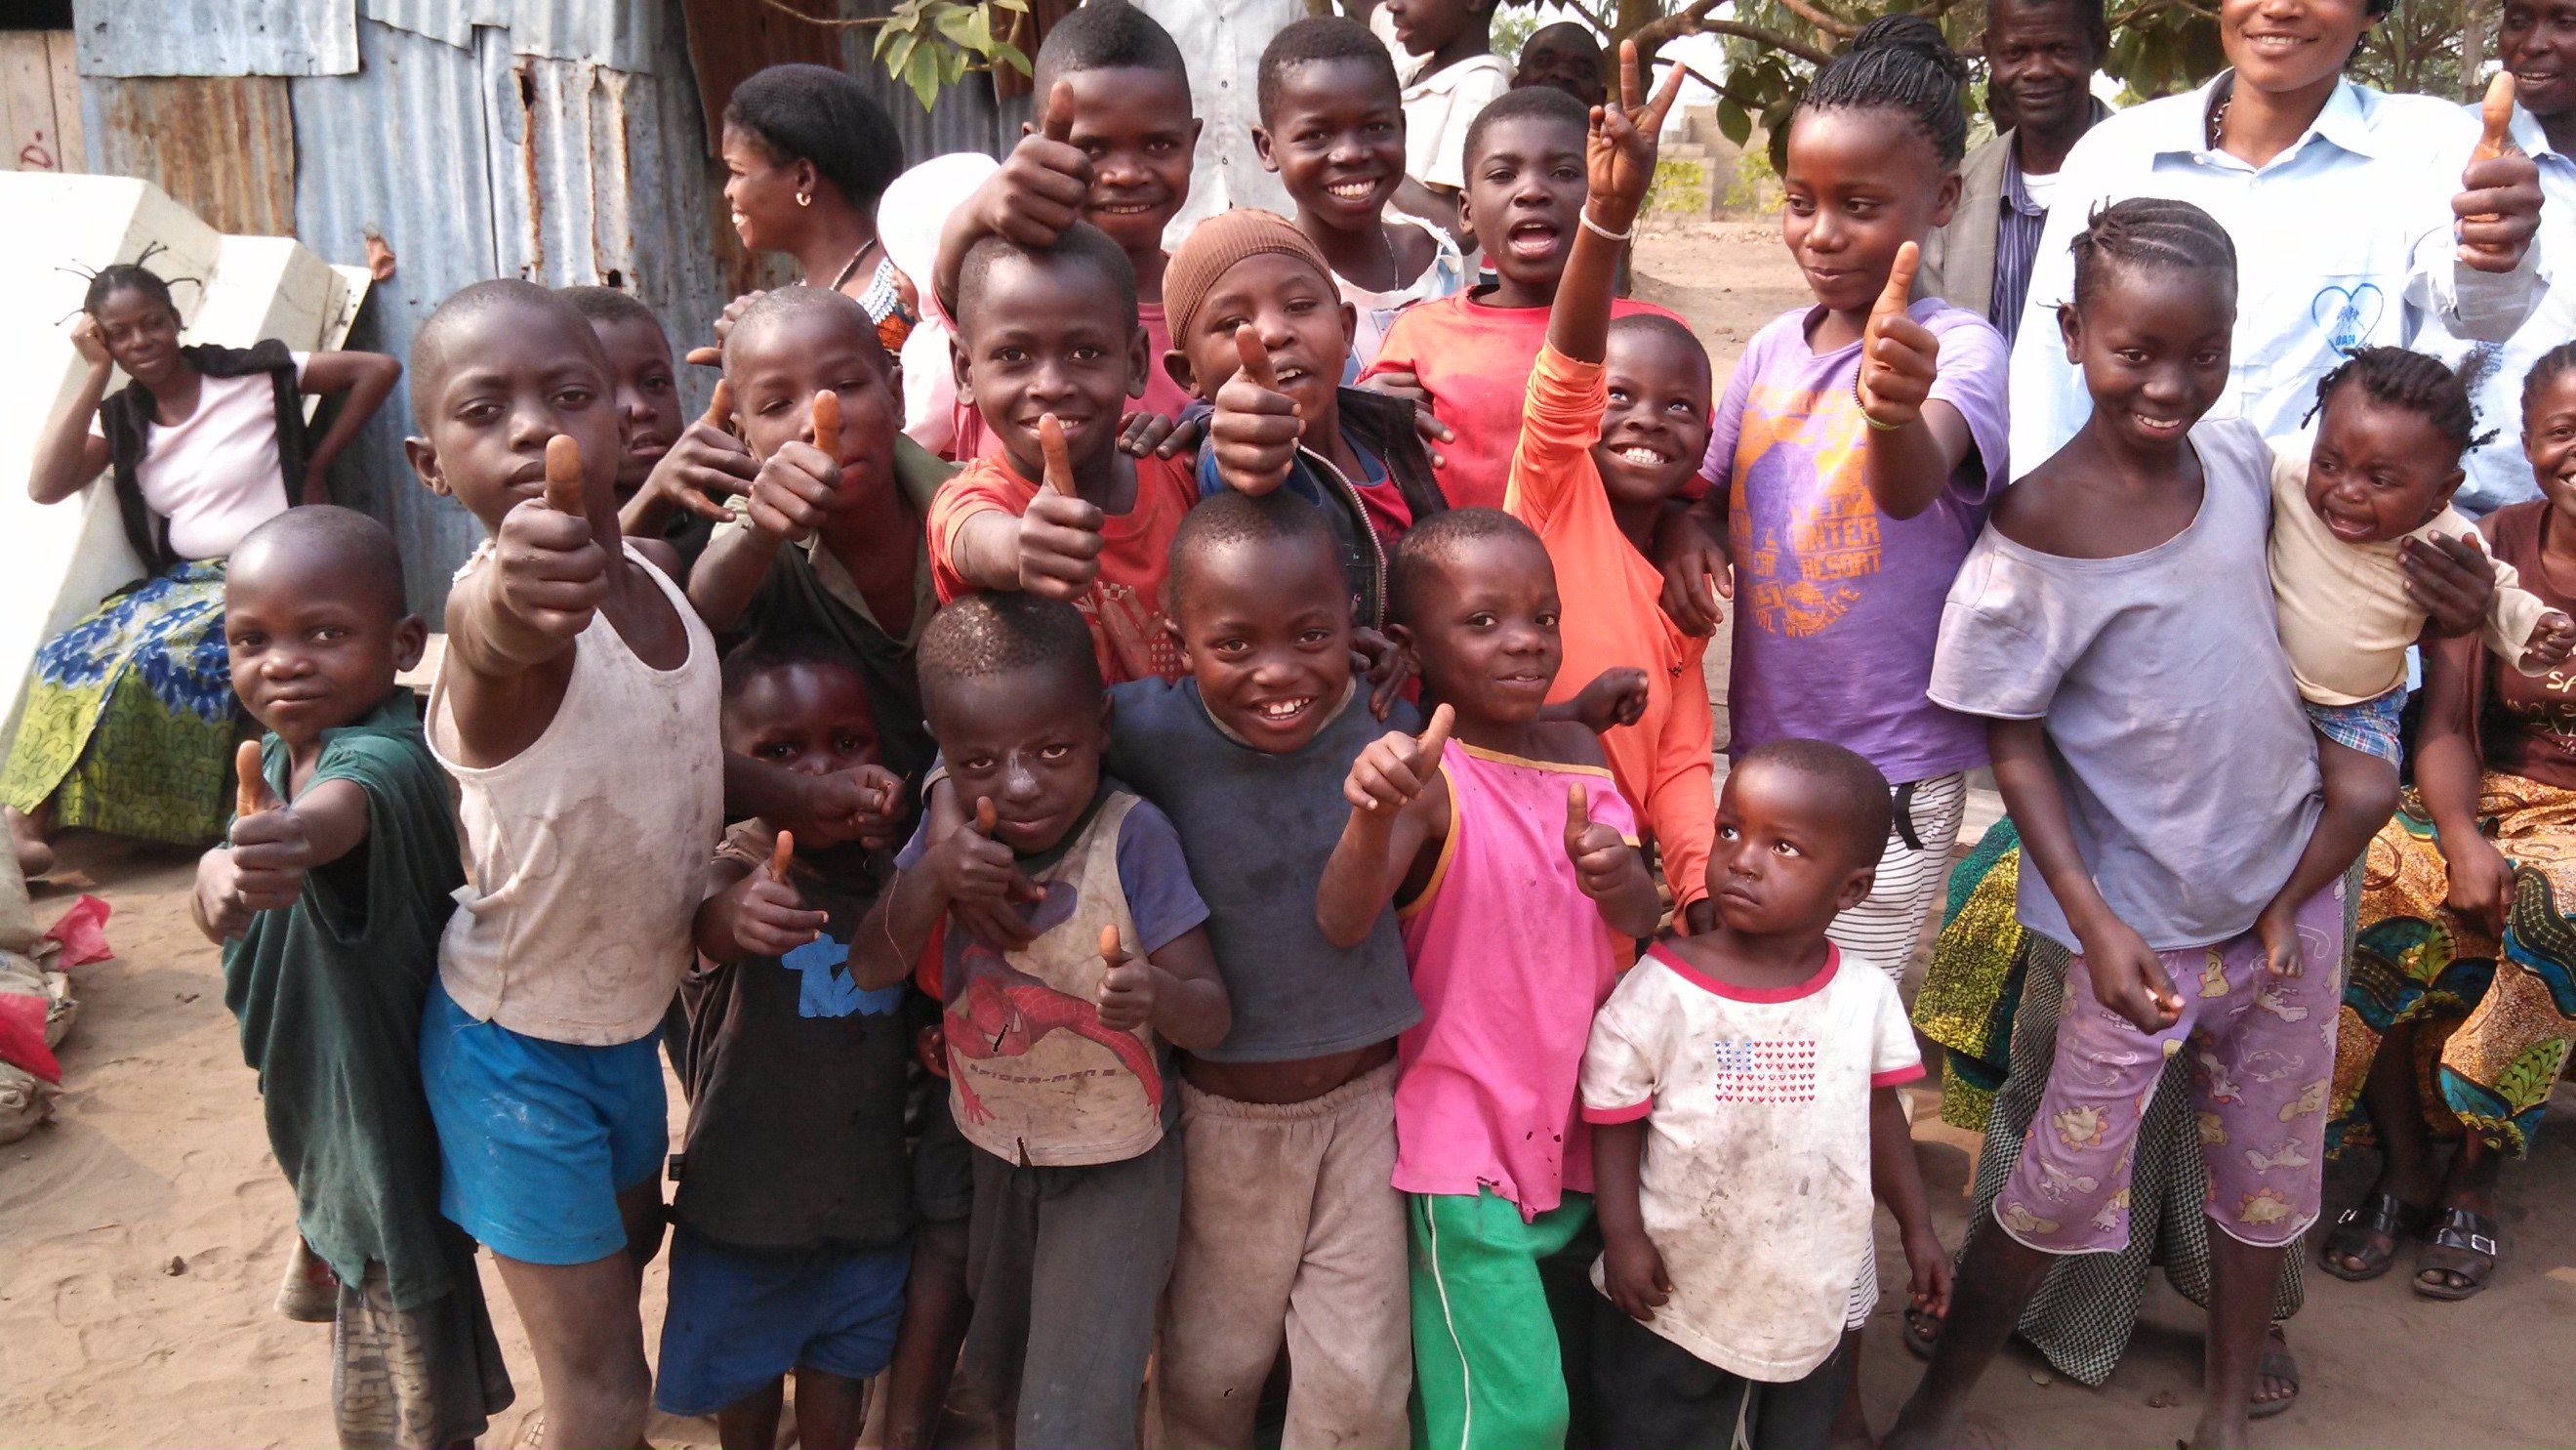 Joyful children and youth of Ou Allons Nous-Oan, Kinshasa, DRC